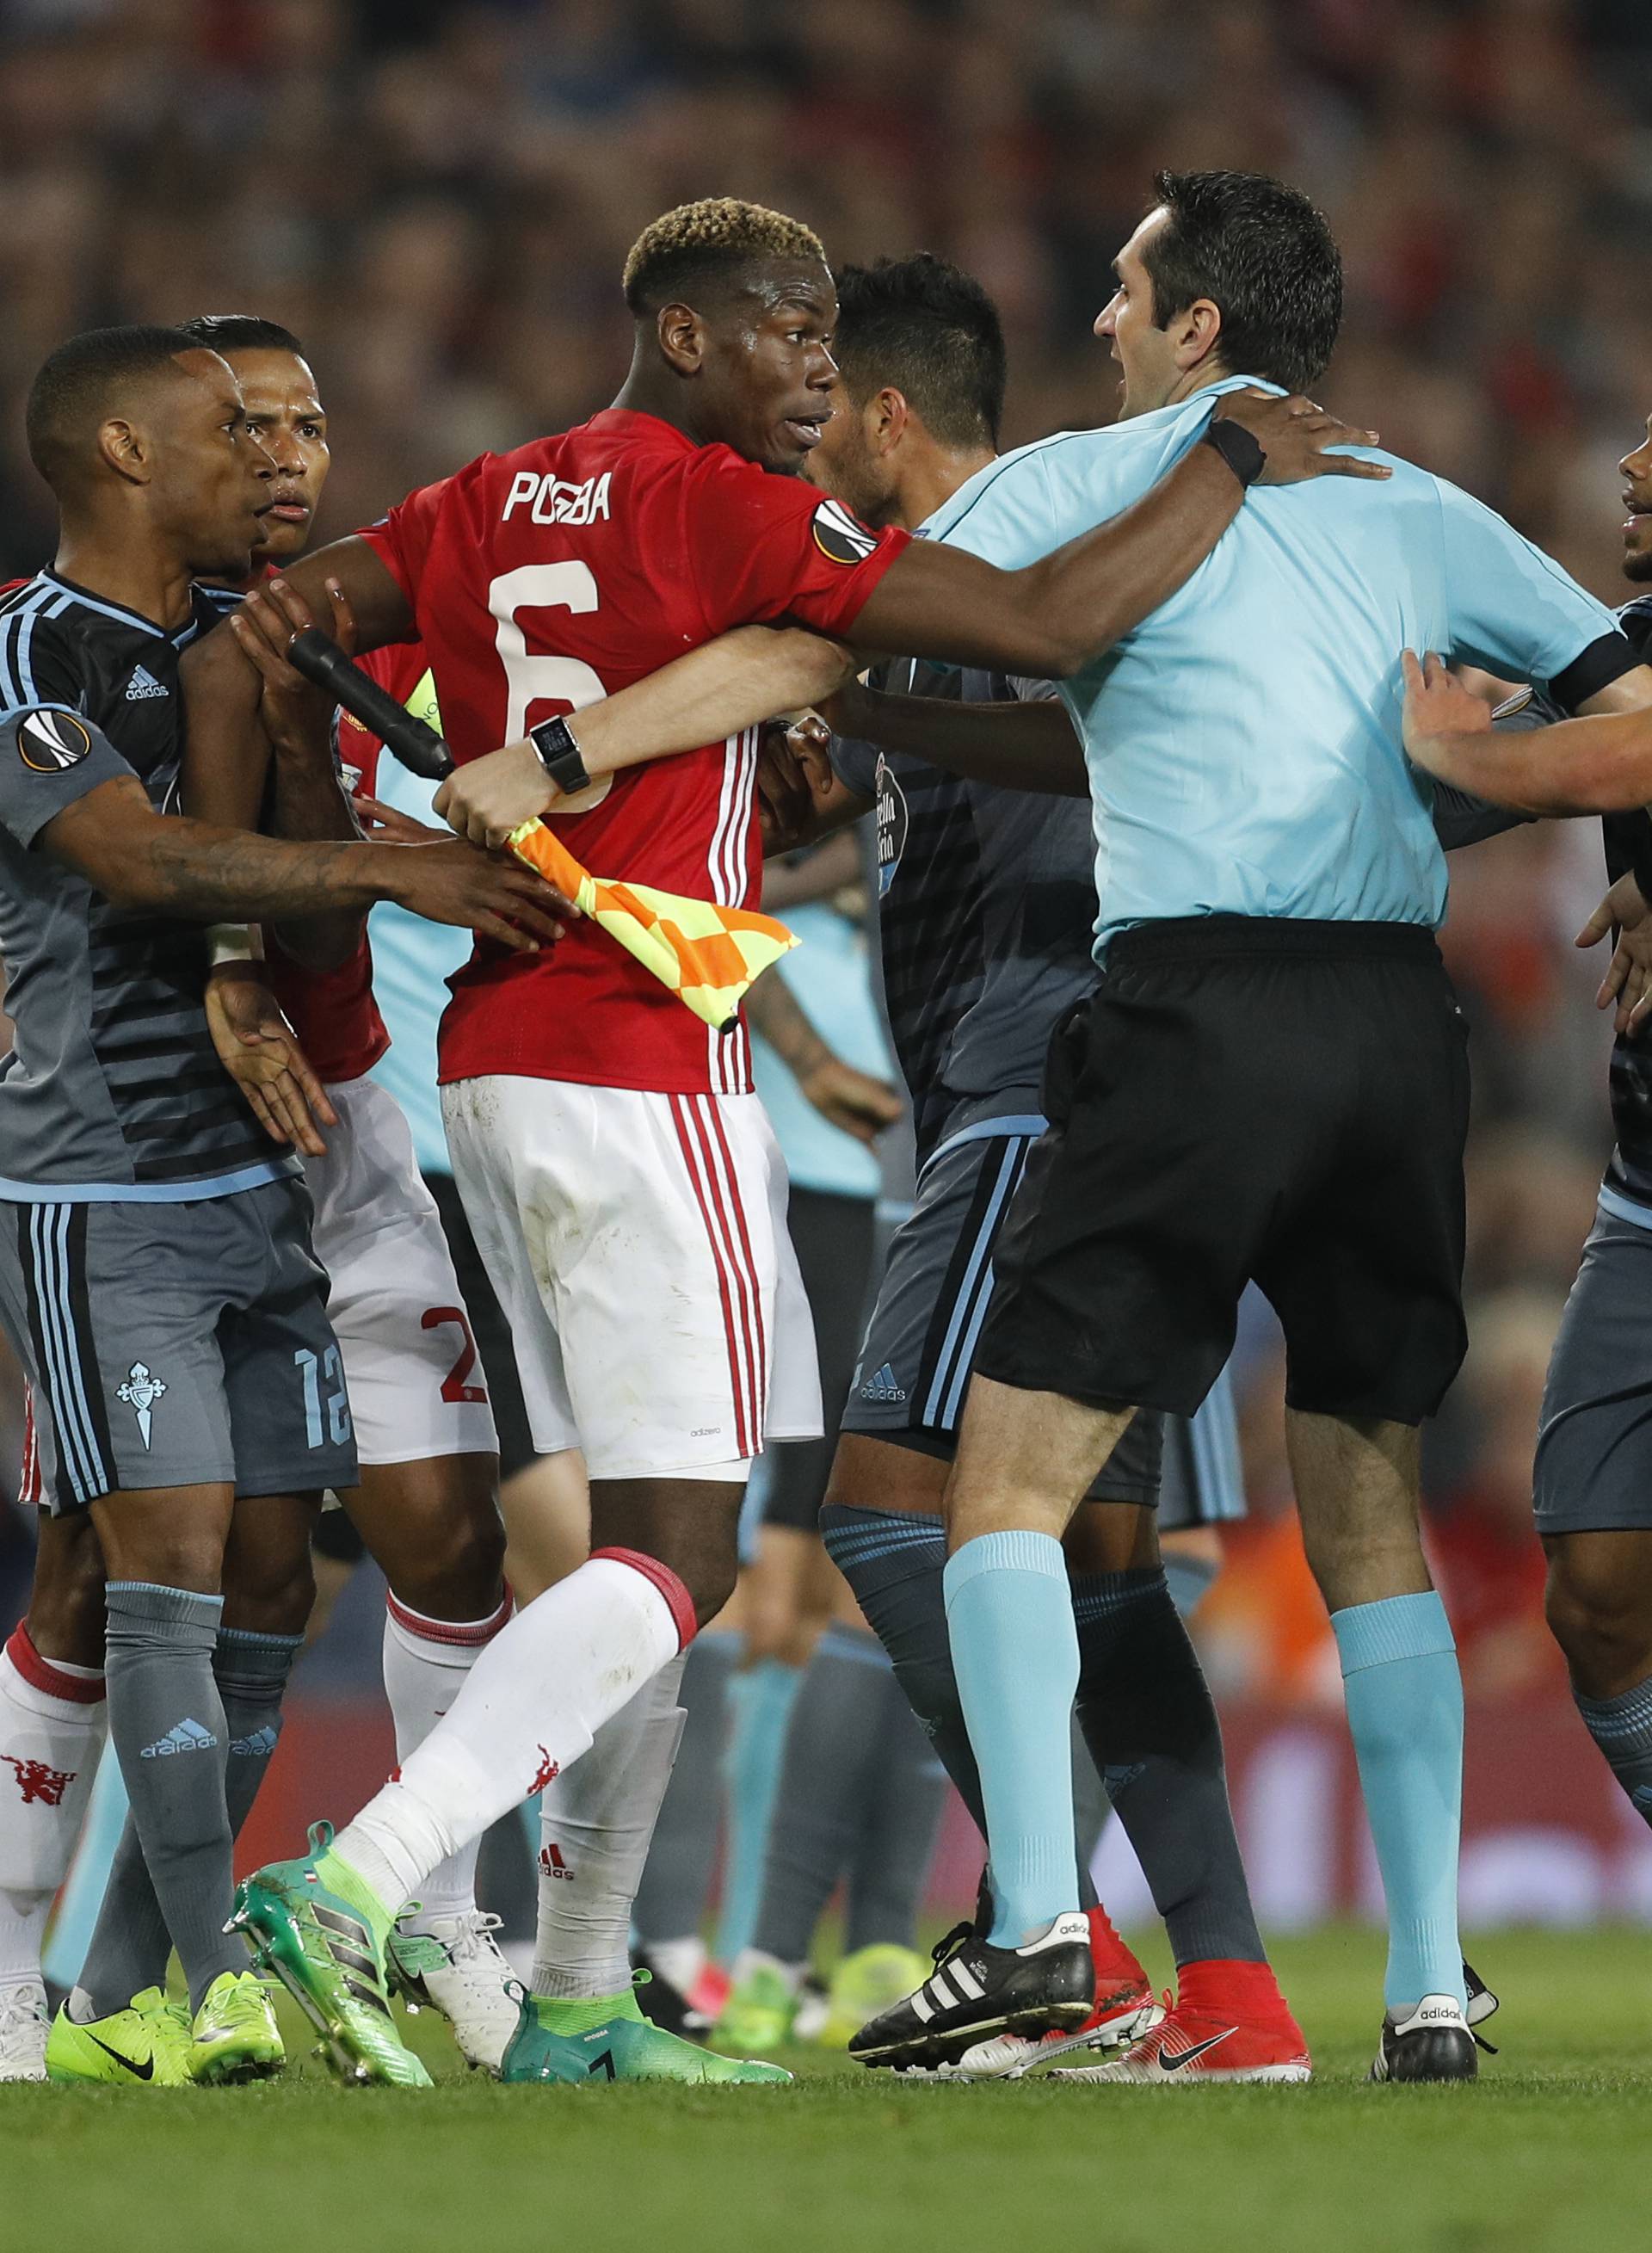 Manchester United's Paul Pogba clashes with Celta Vigo's Facundo Roncaglia as referee Ovidiu Hategan intervenes